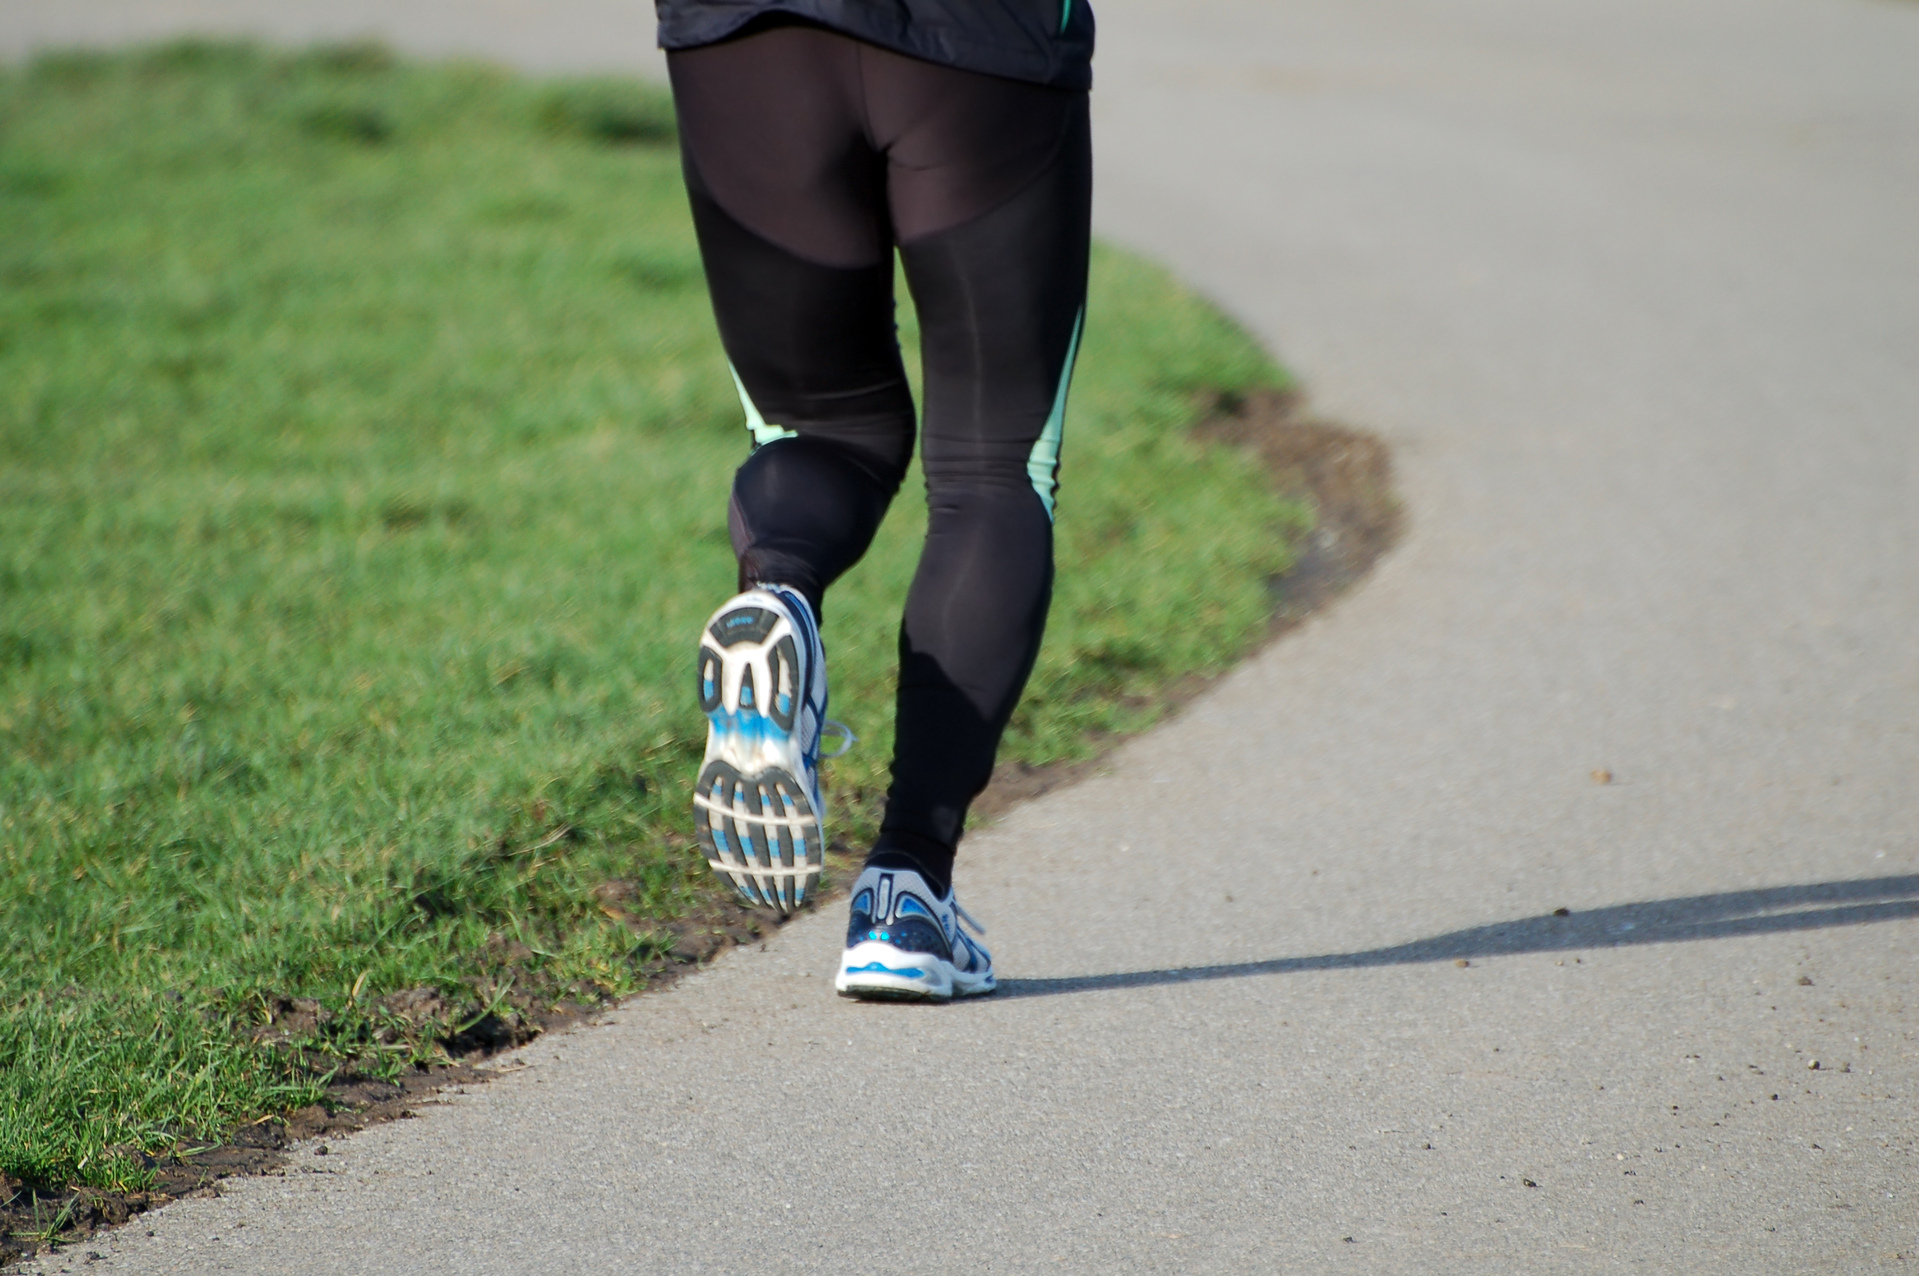 A man's legs shown jogging